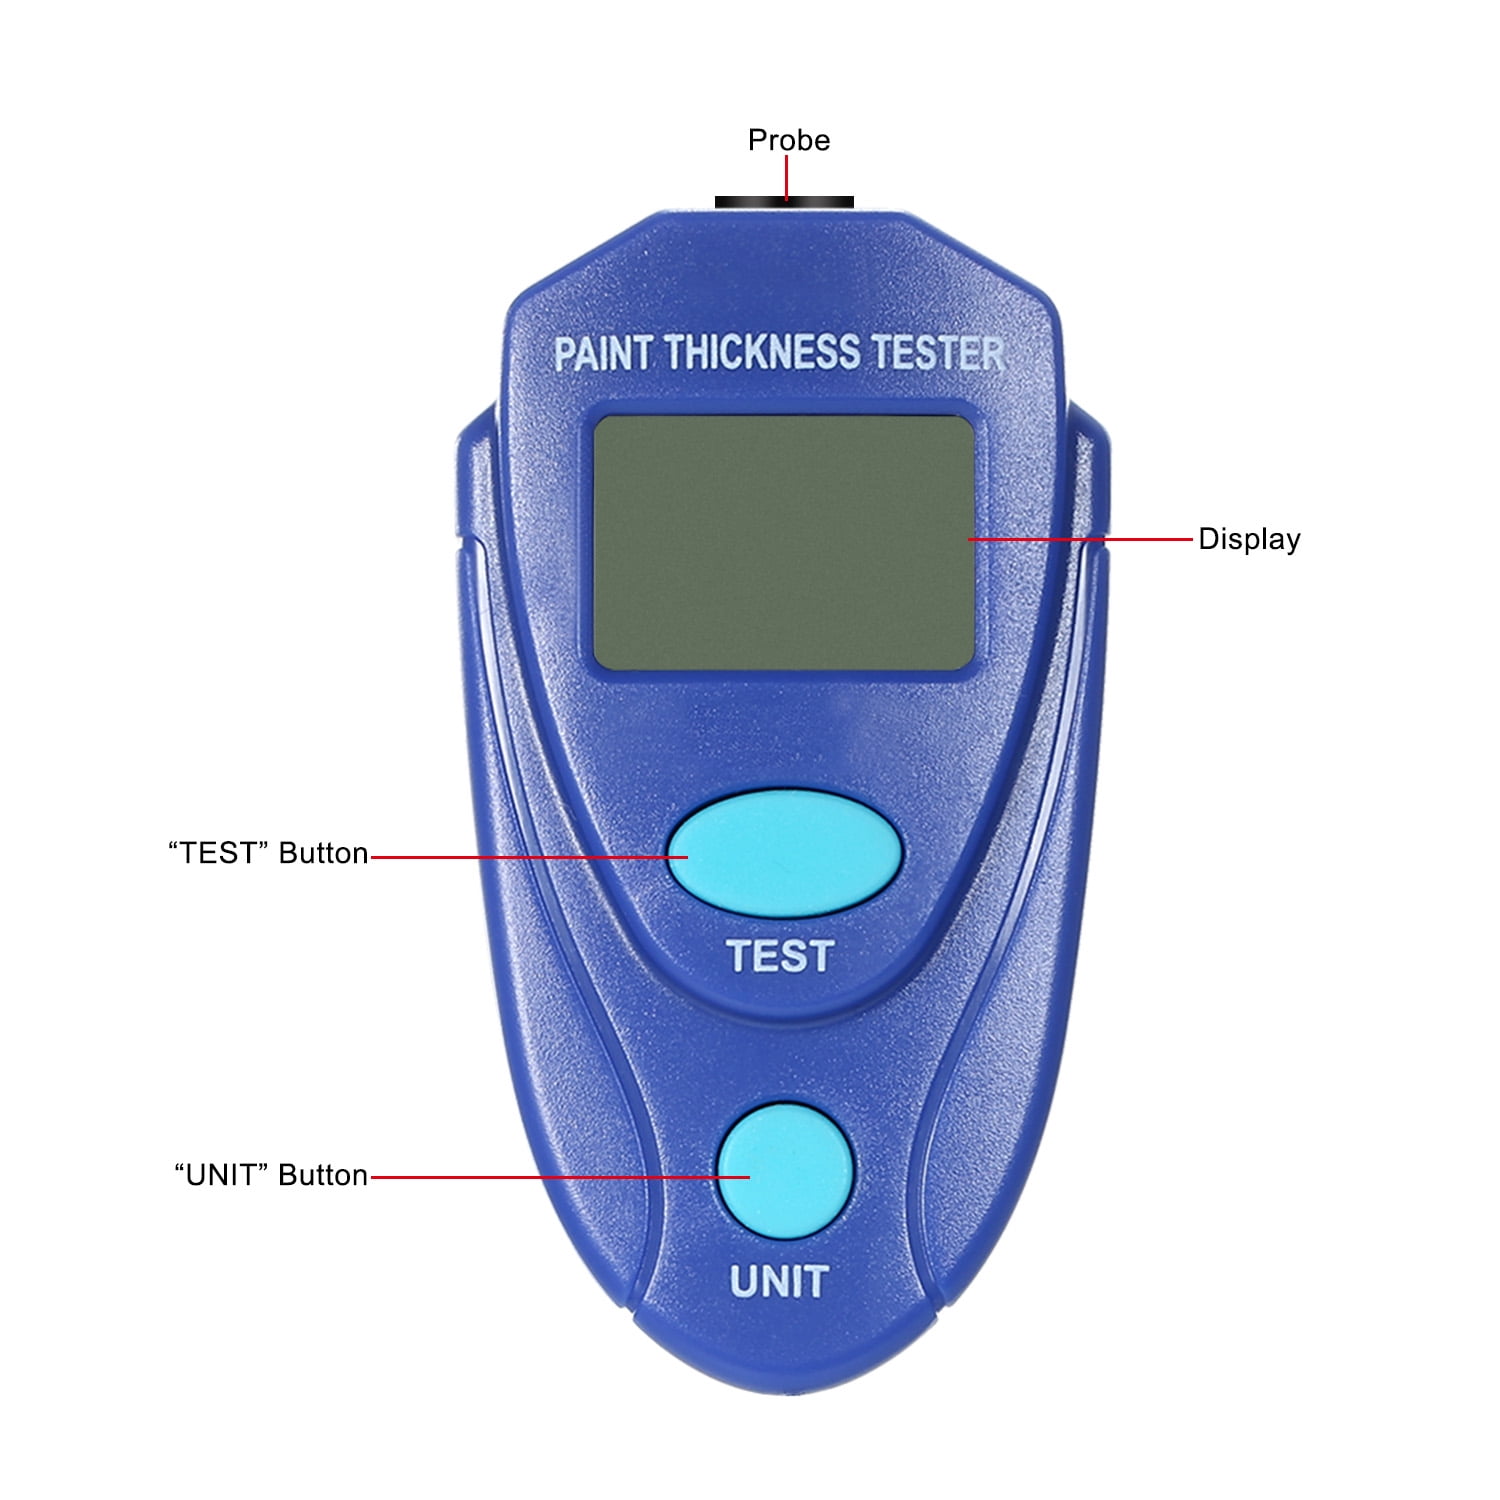 LCD Digital Car Paint Coating Thickness Probe Tester Gauge Meter Measuring Test# 